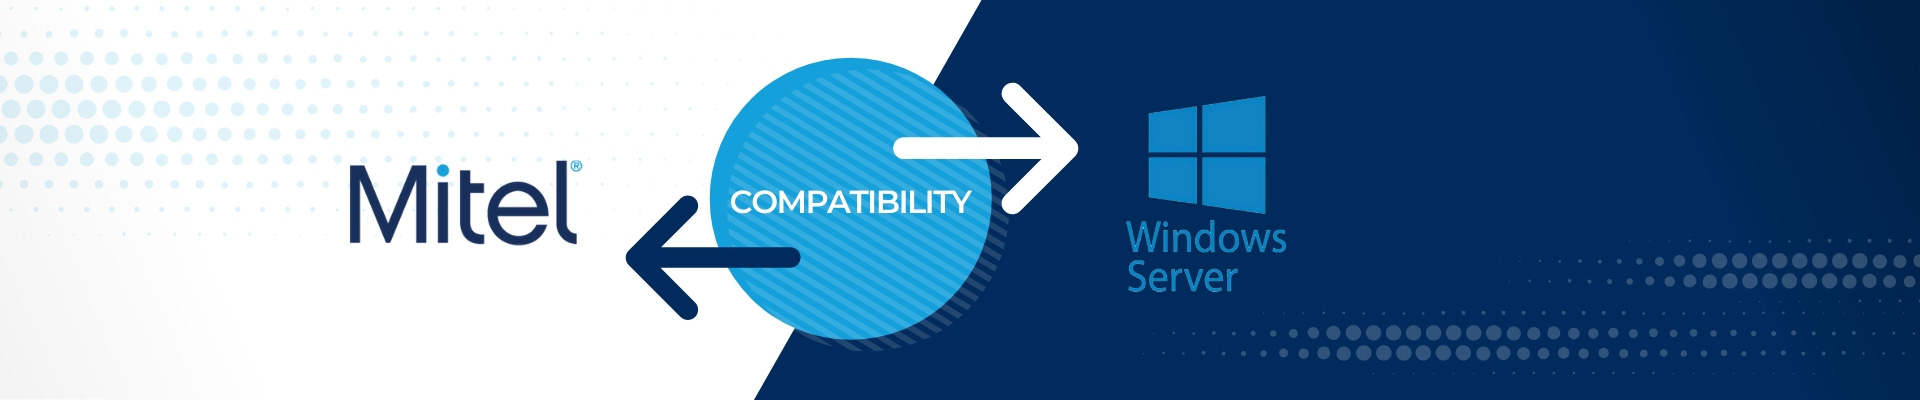 Microsoft Windows Server and Mitel compatability